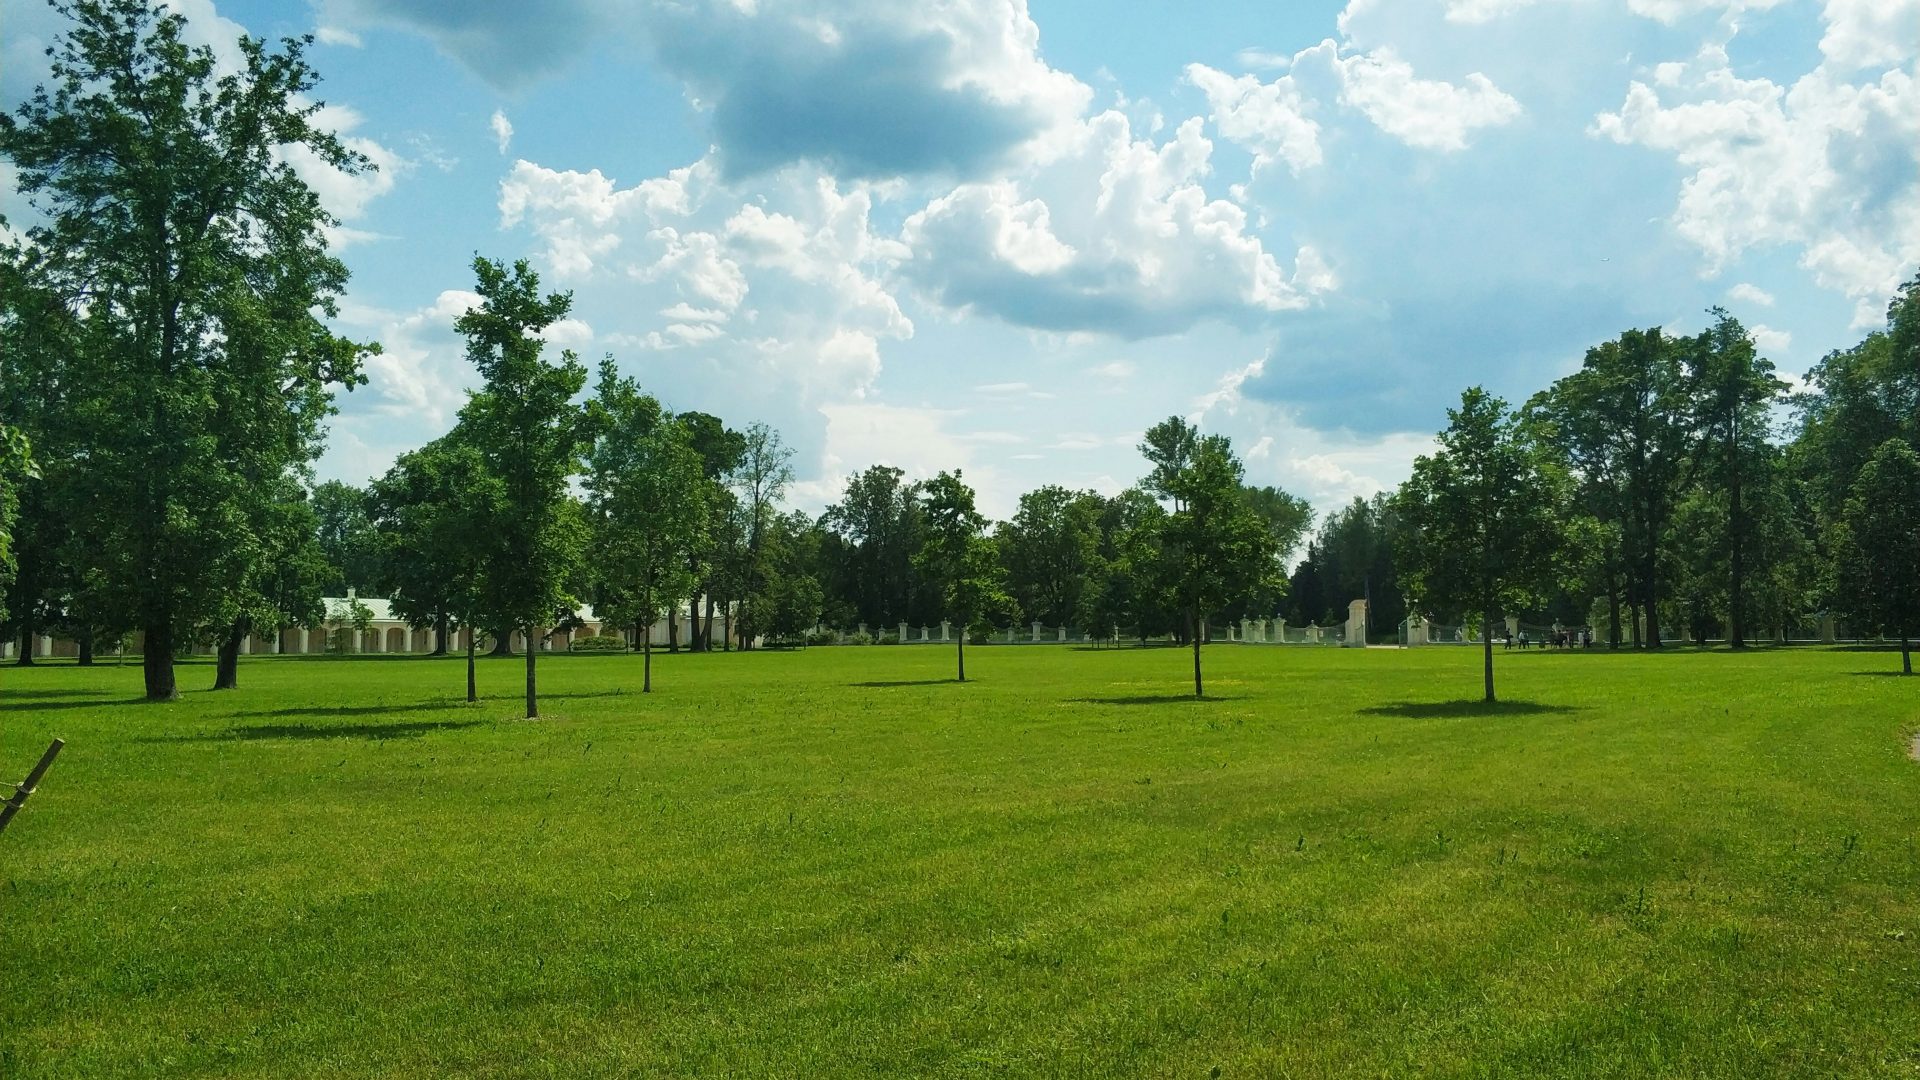 green trees on green grass field